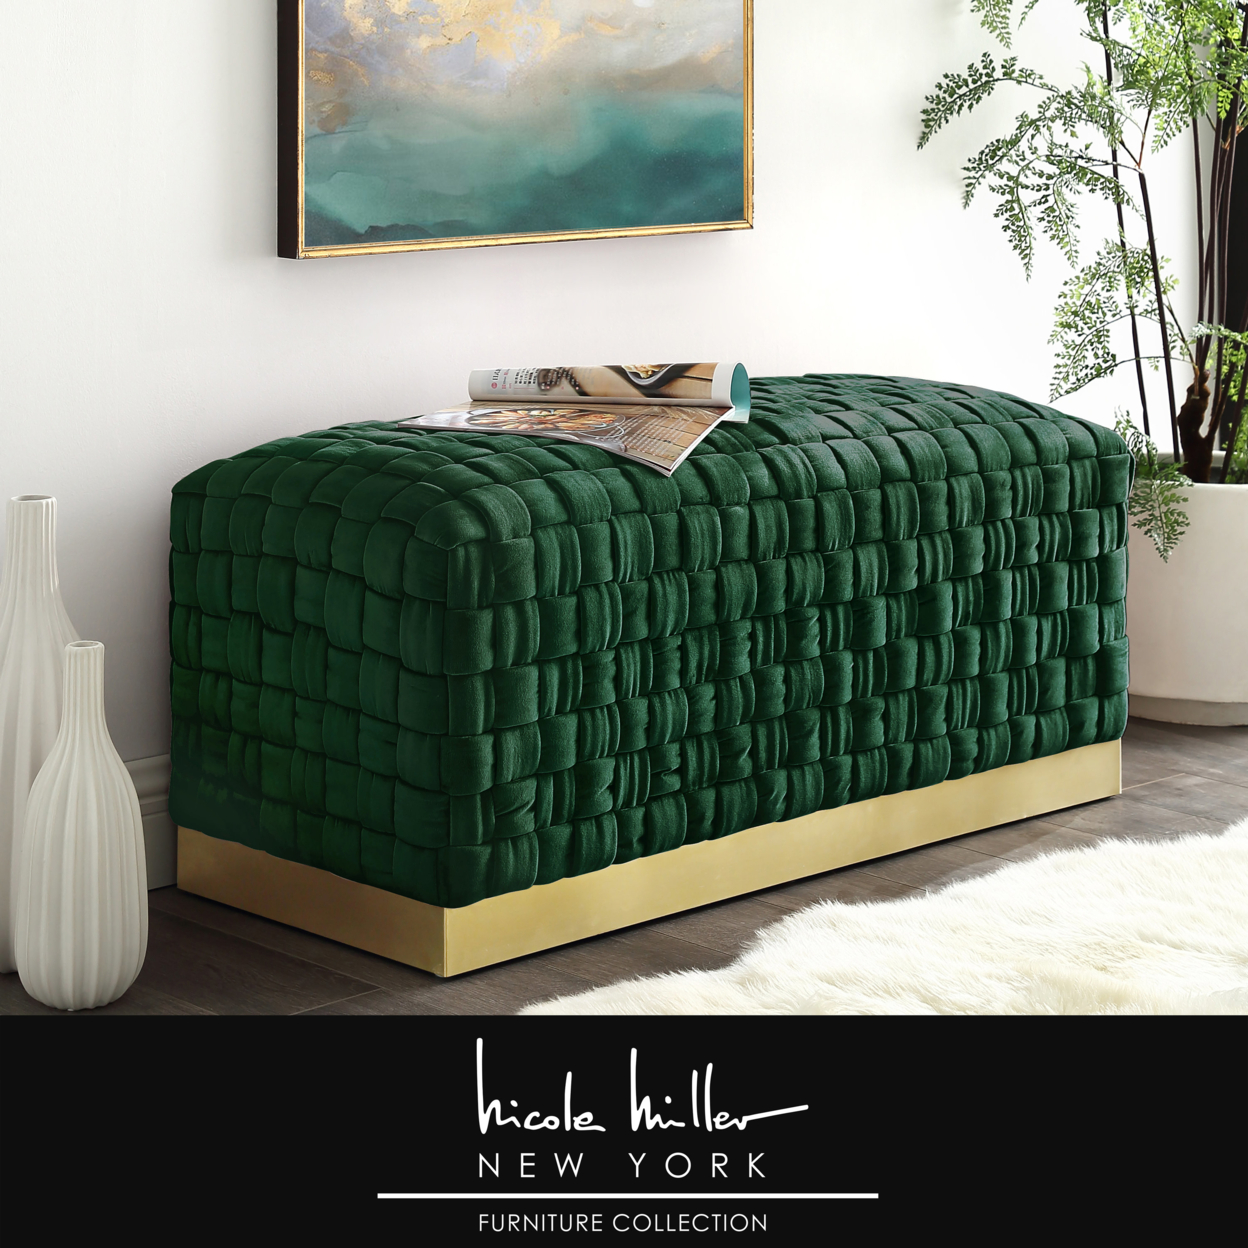 Griffin Velvet Hand Woven Bench-Luxurious Upholstery-Matte Stainless Steel Base-By Nicole Miller - Hunter Green/ Gold